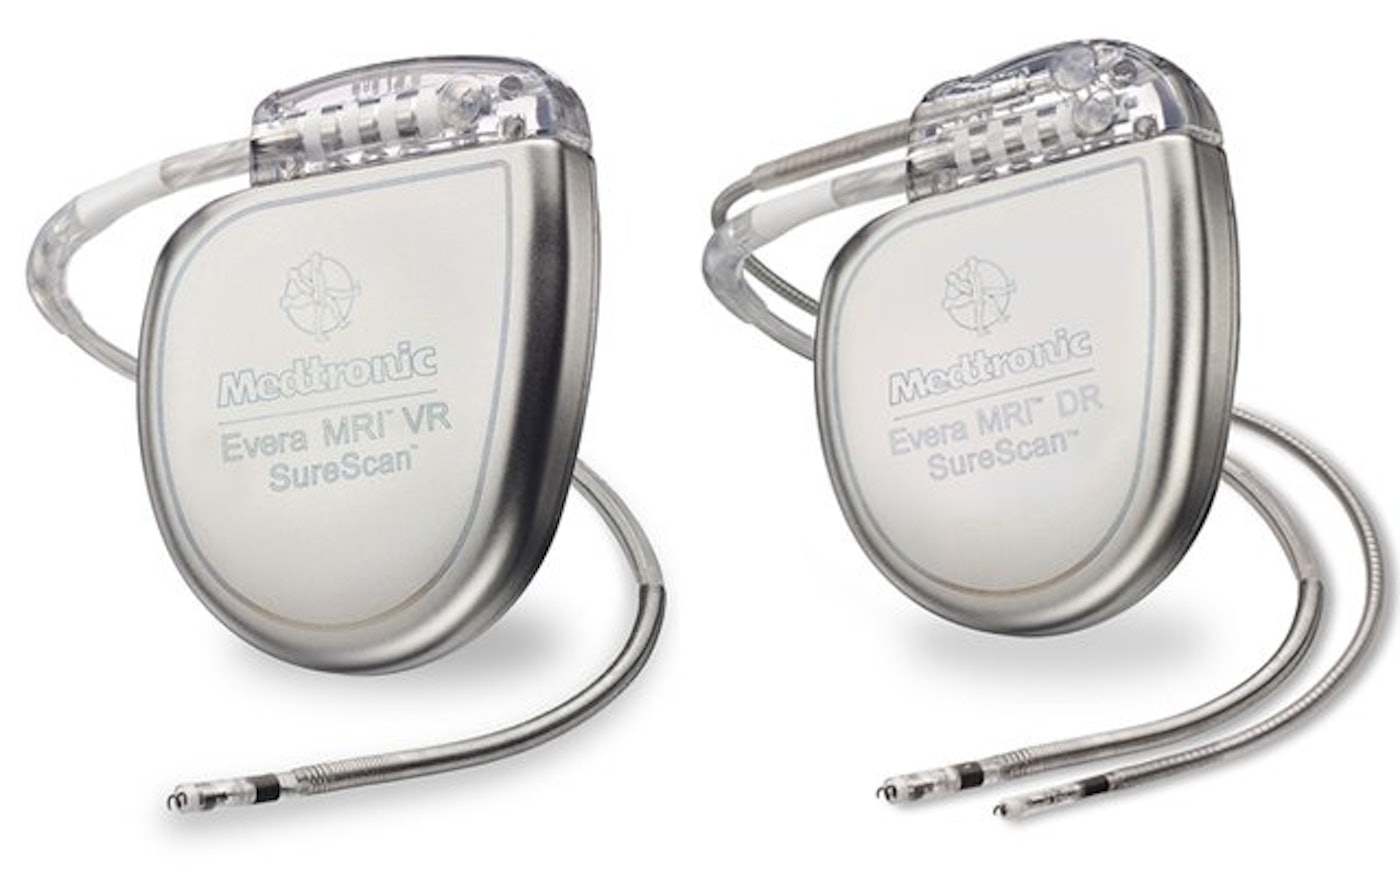 Medtronic Recalls Implantable Defibrillators Healthcare Packaging